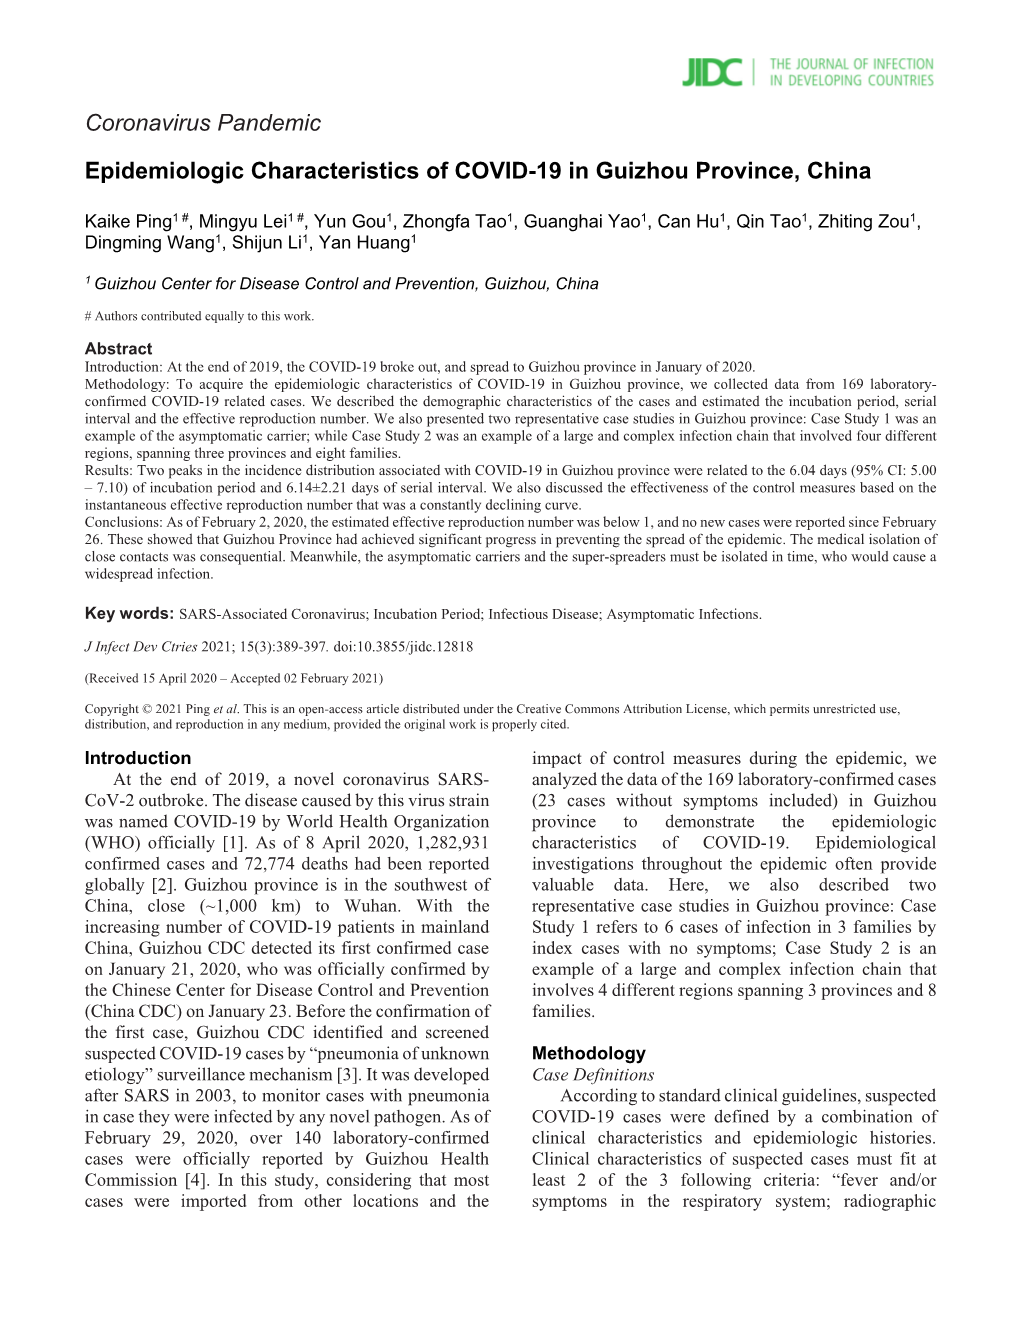 Coronavirus Pandemic Epidemiologic Characteristics of COVID-19 in Guizhou Province, China